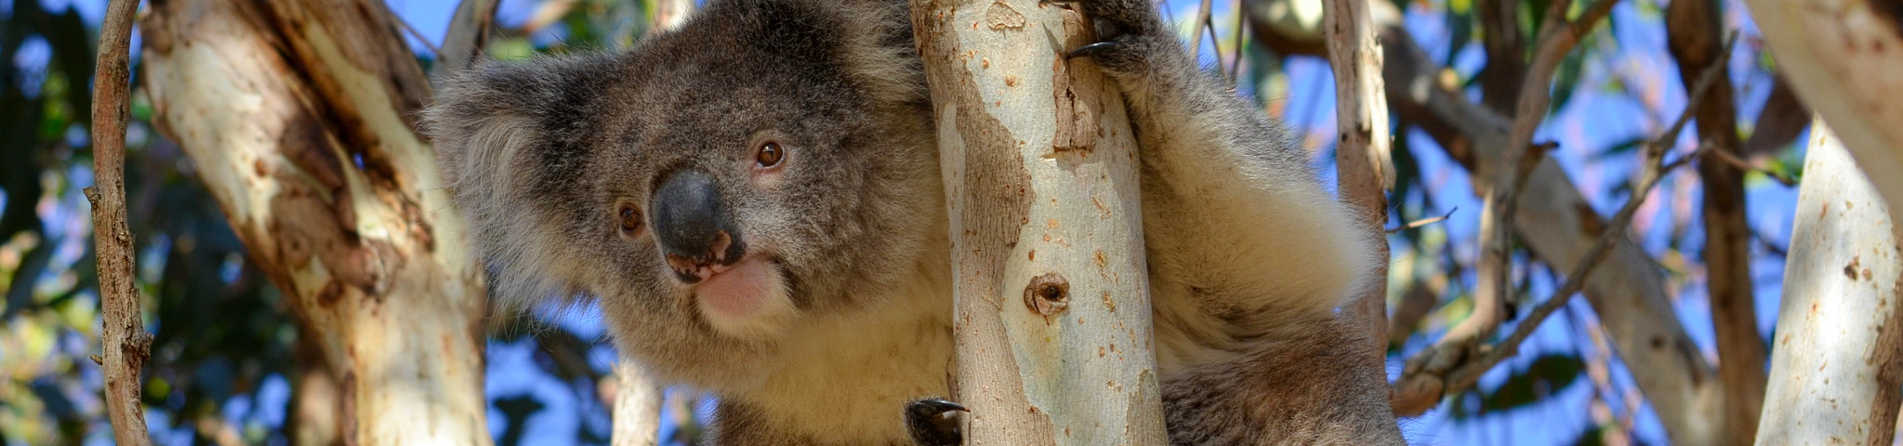 Are there Koalas on Kangaroo Island?